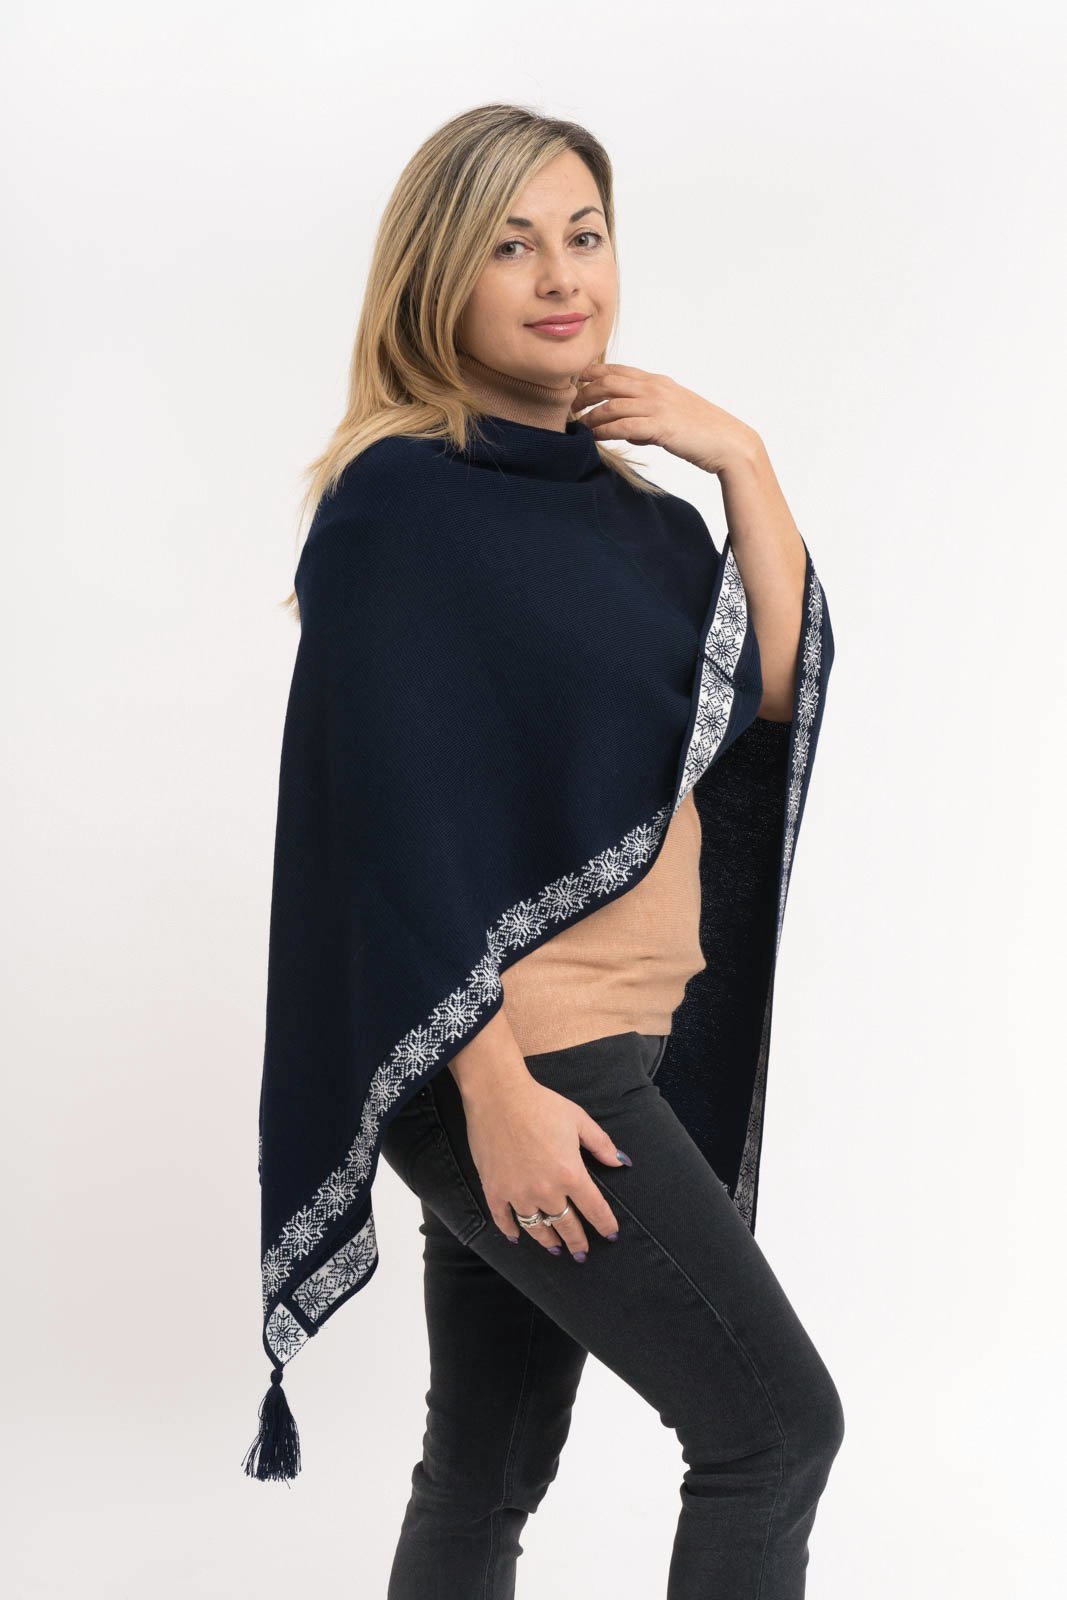 Vilo multi-wear jacquard knit poncho - Natural Style Estonia